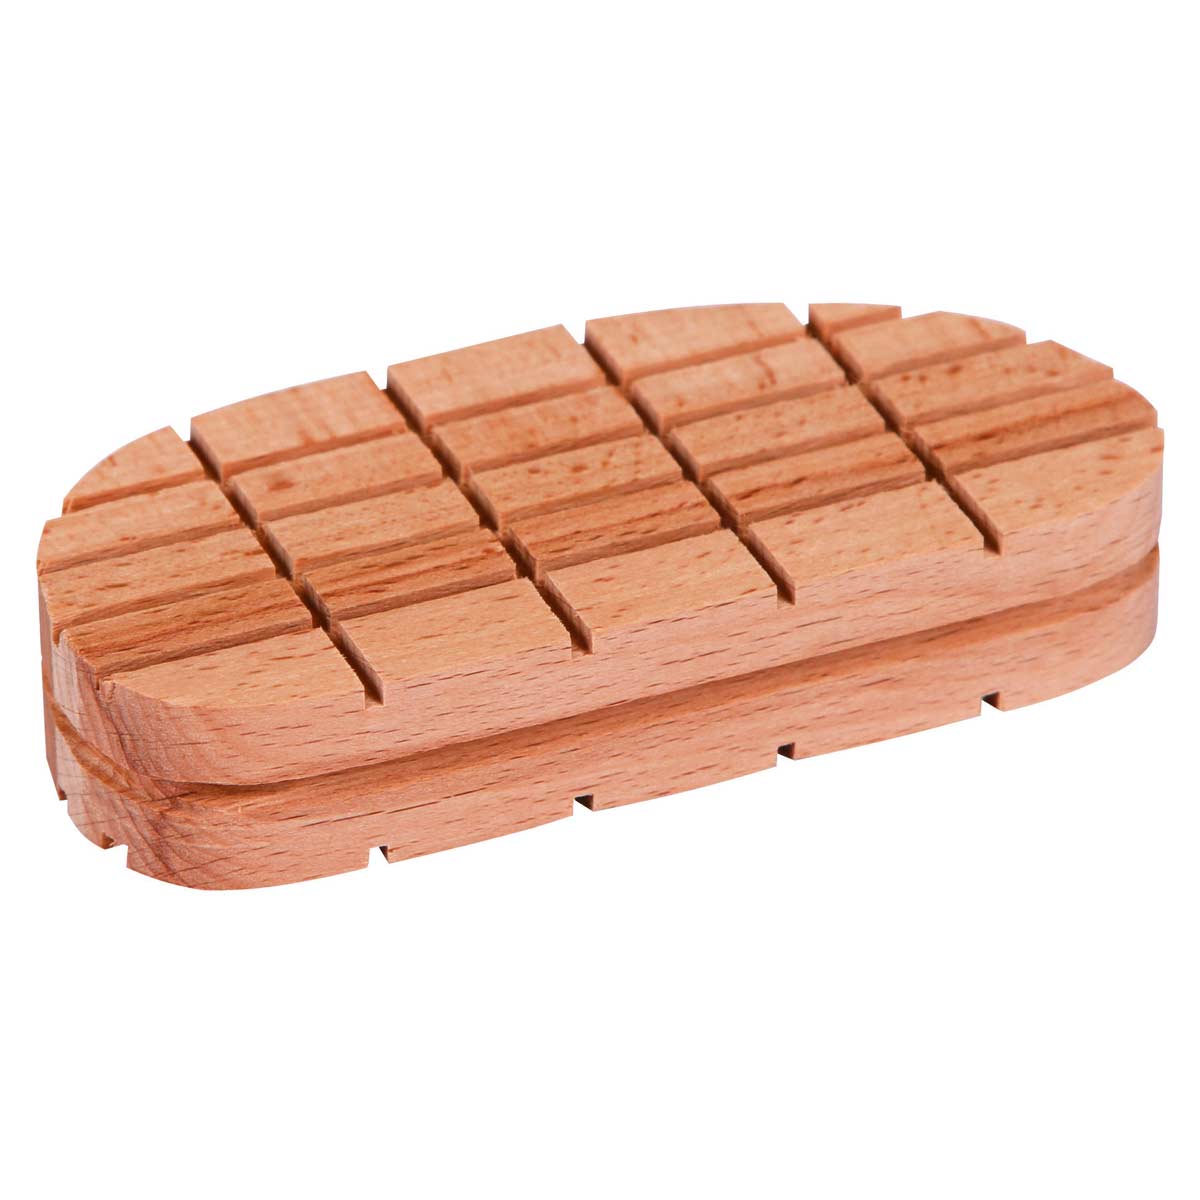 Wooden block Standard